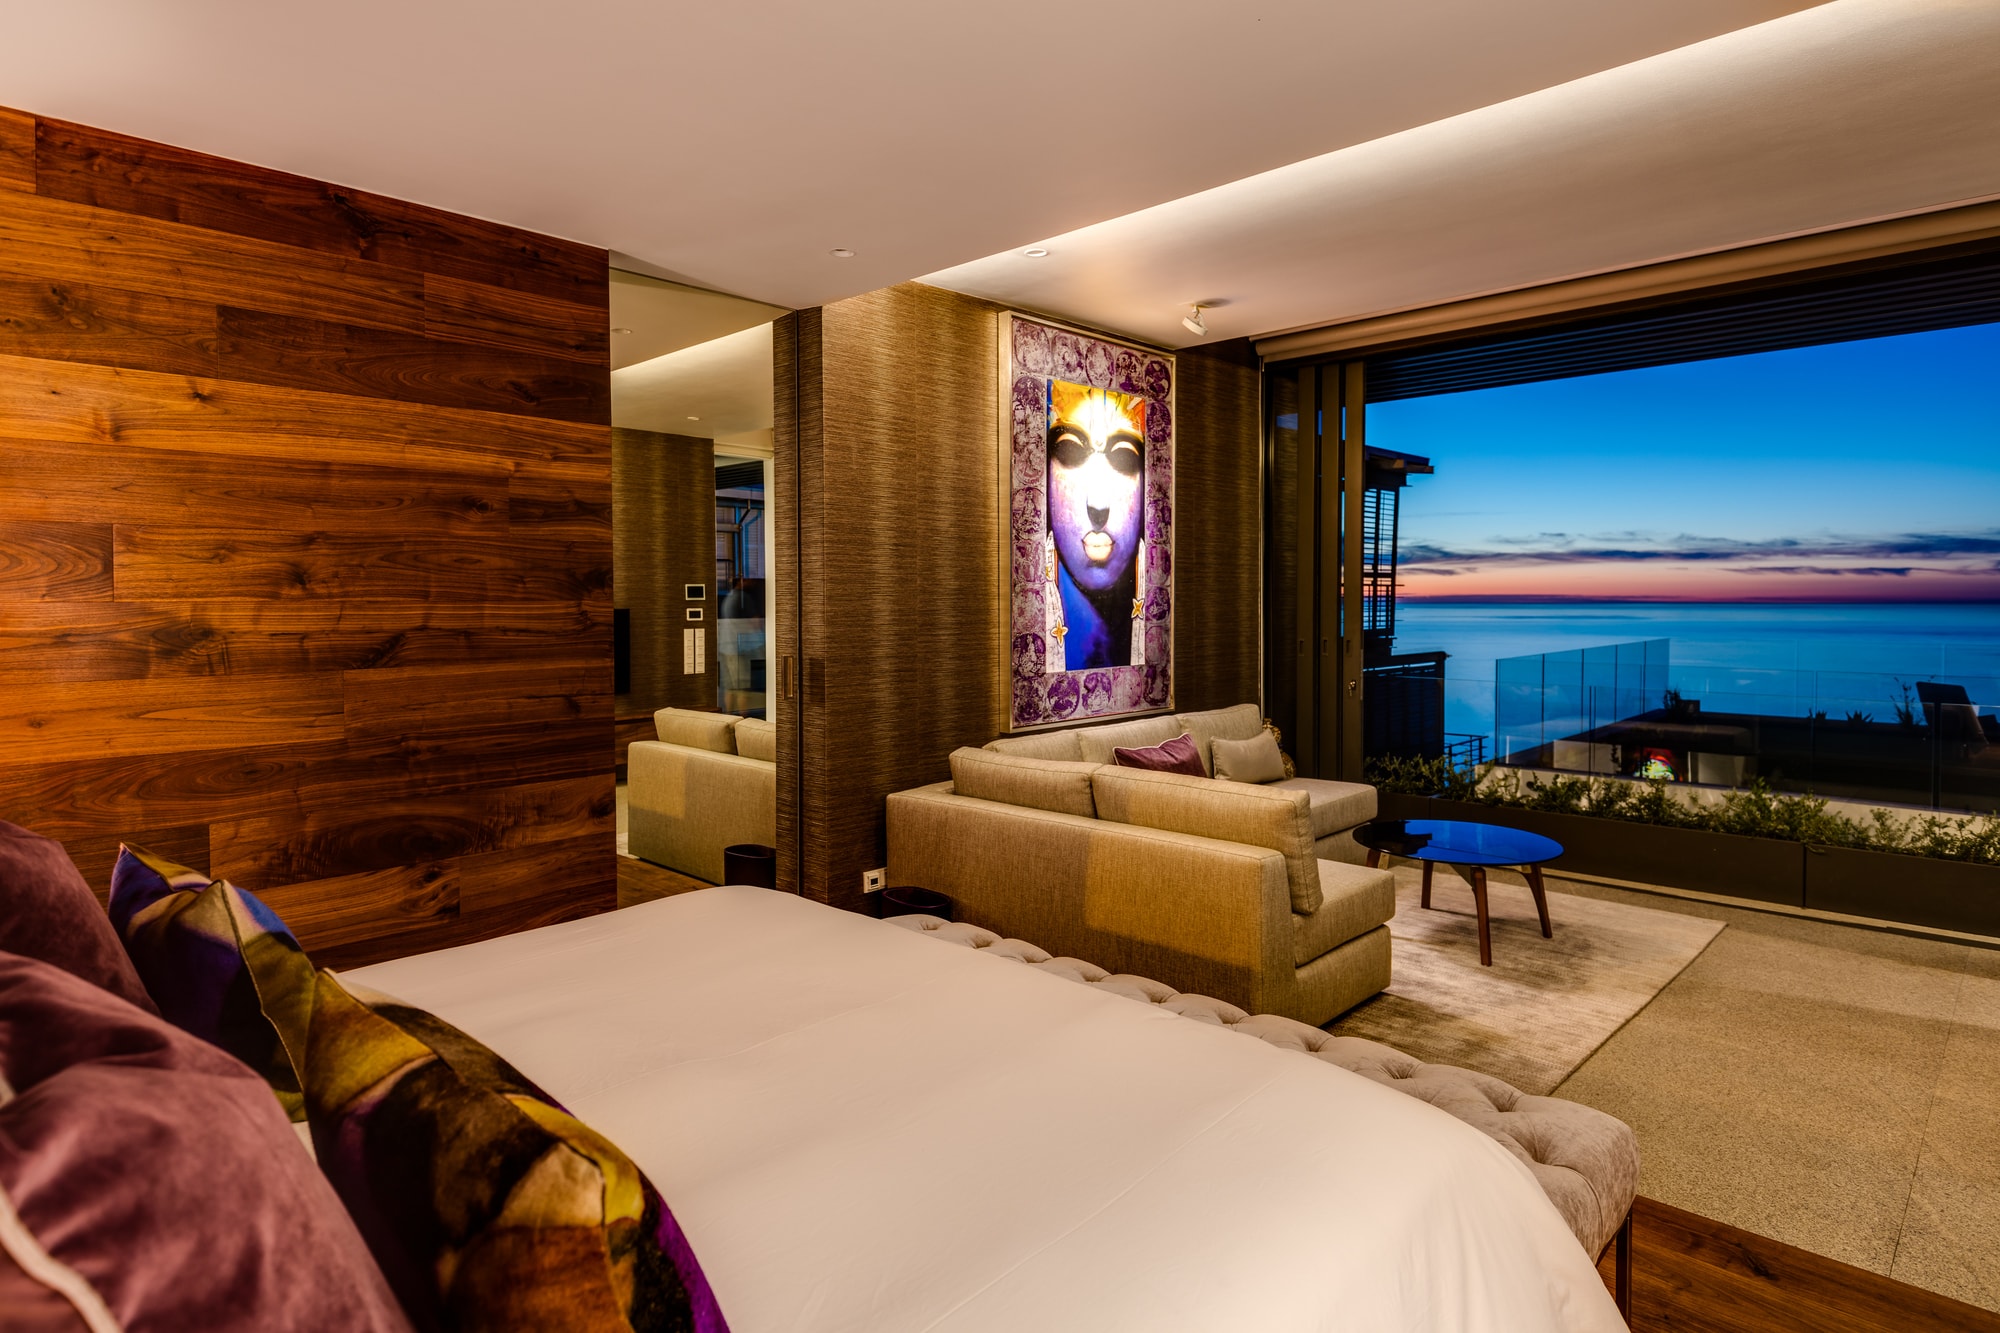 Sealion master bedroom with view of ocean skyline